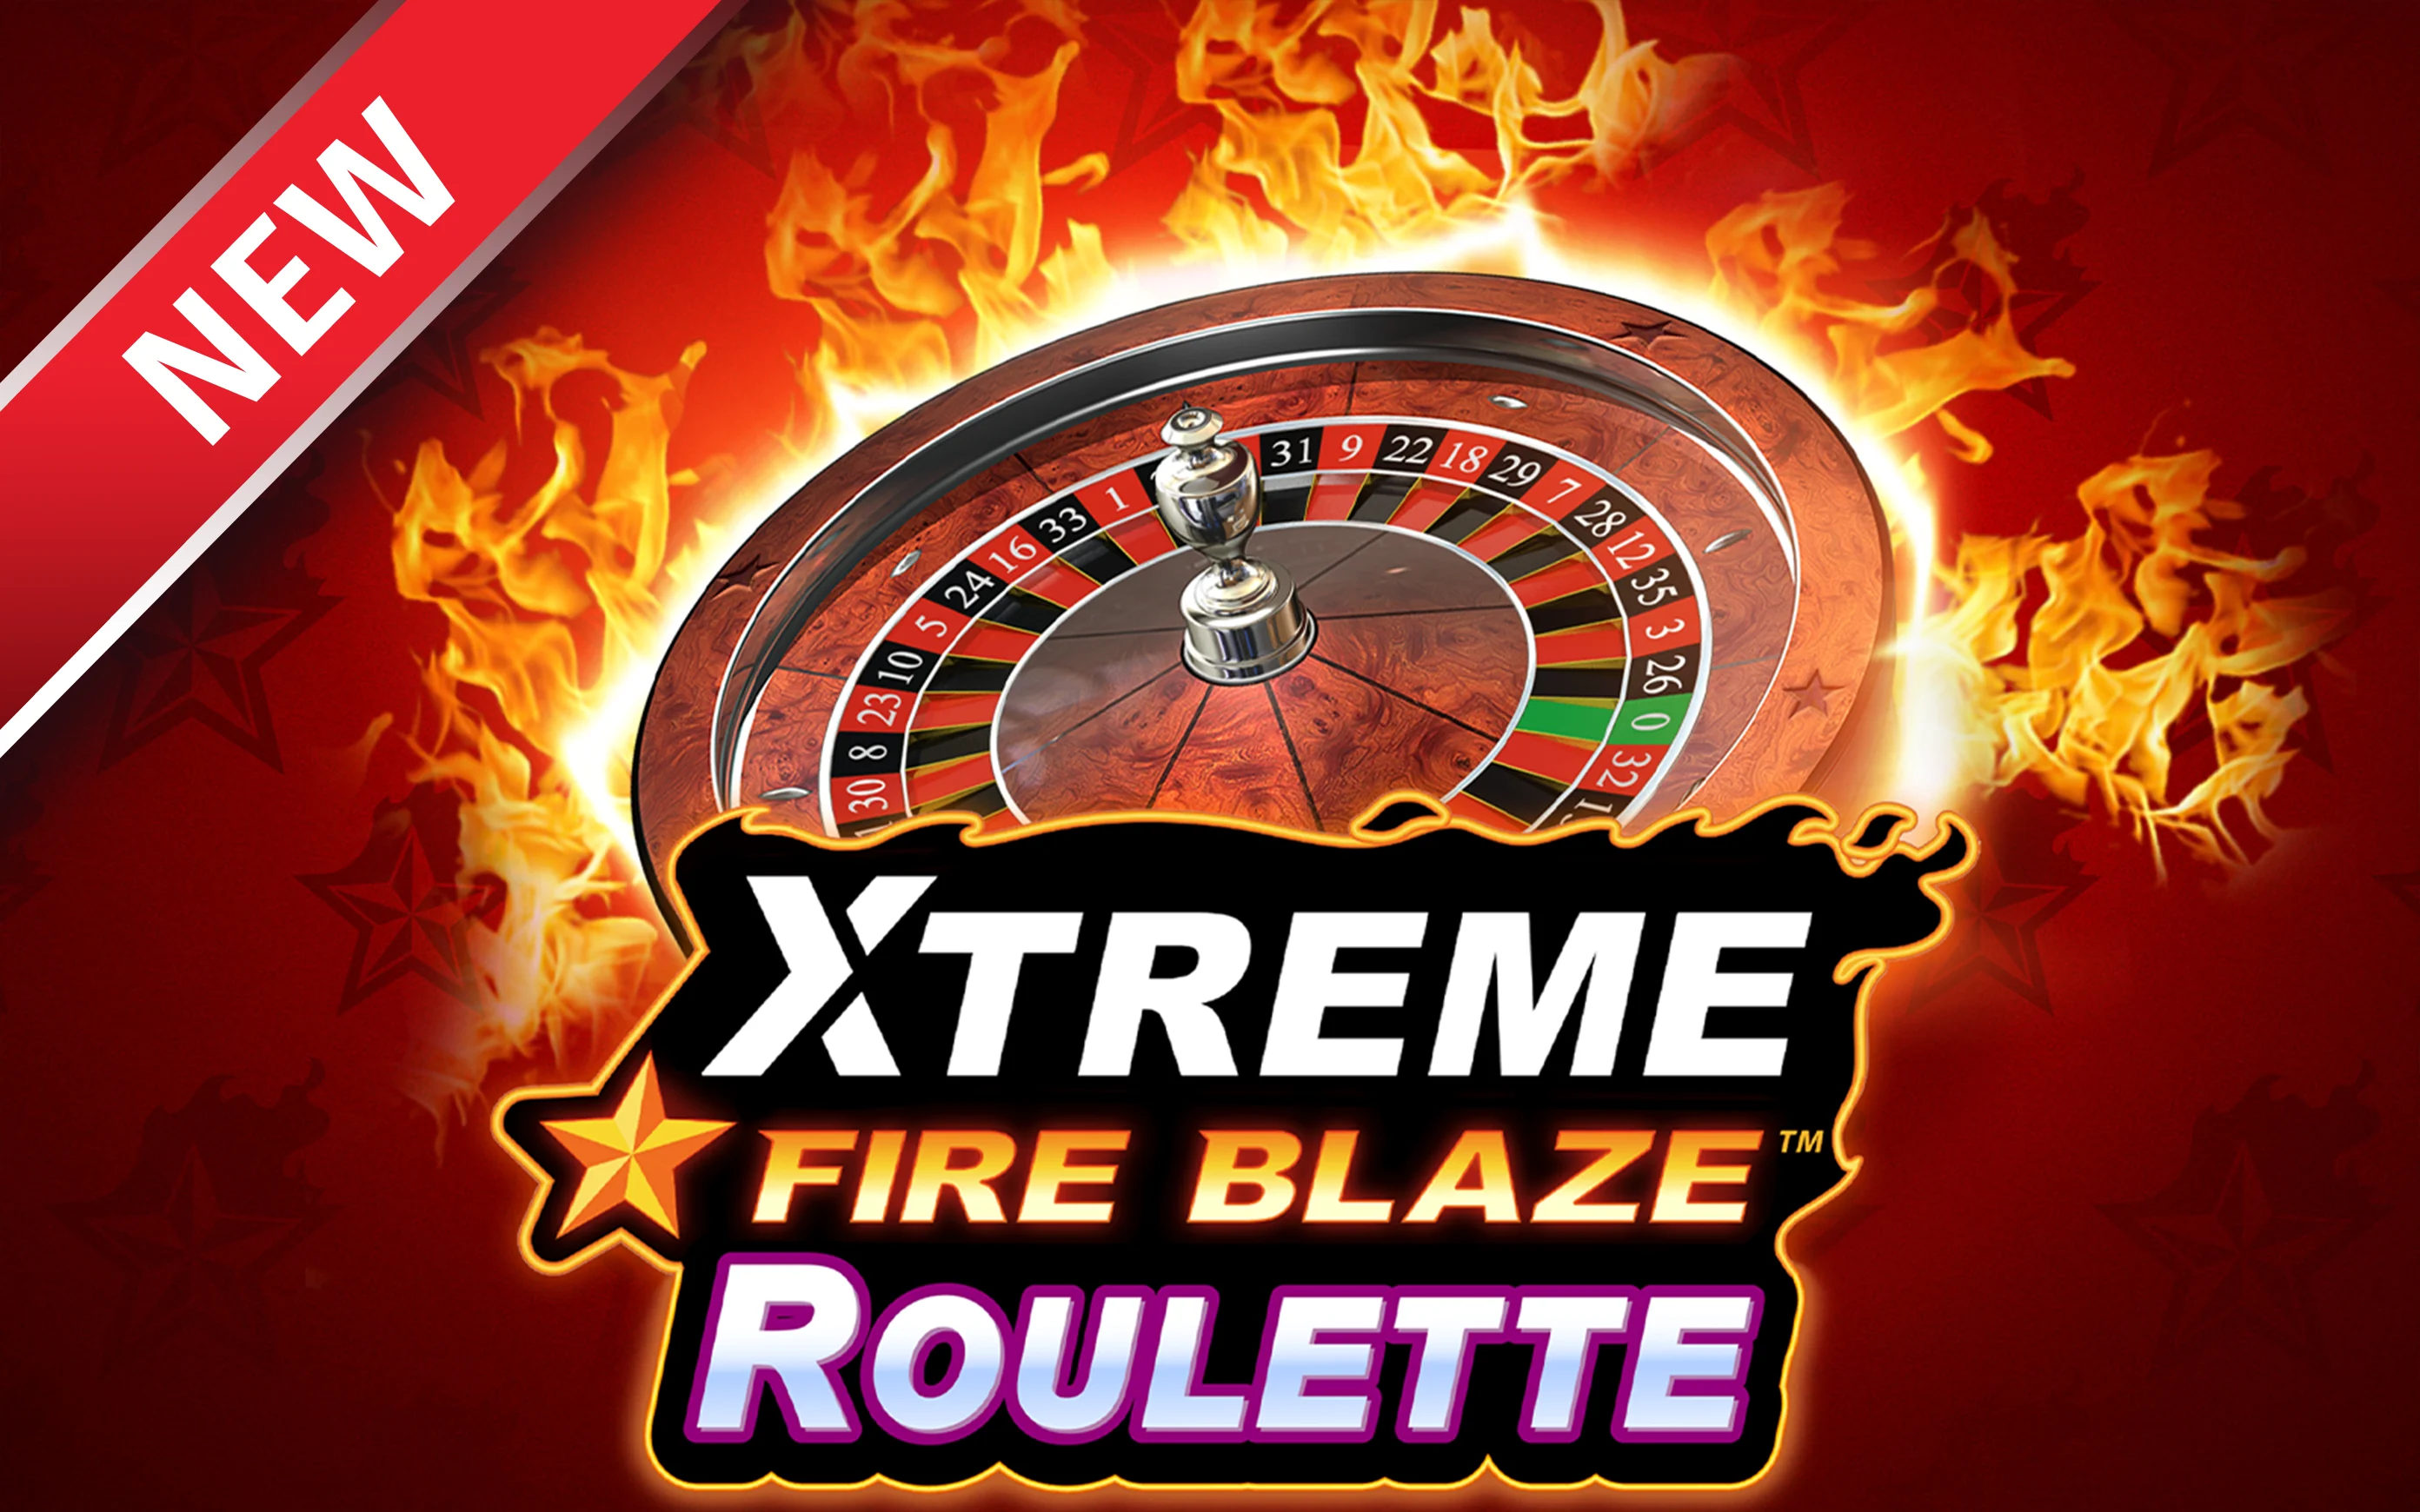 Juega a Xtreme Fire Blaze Roulette en el casino en línea de Starcasino.be